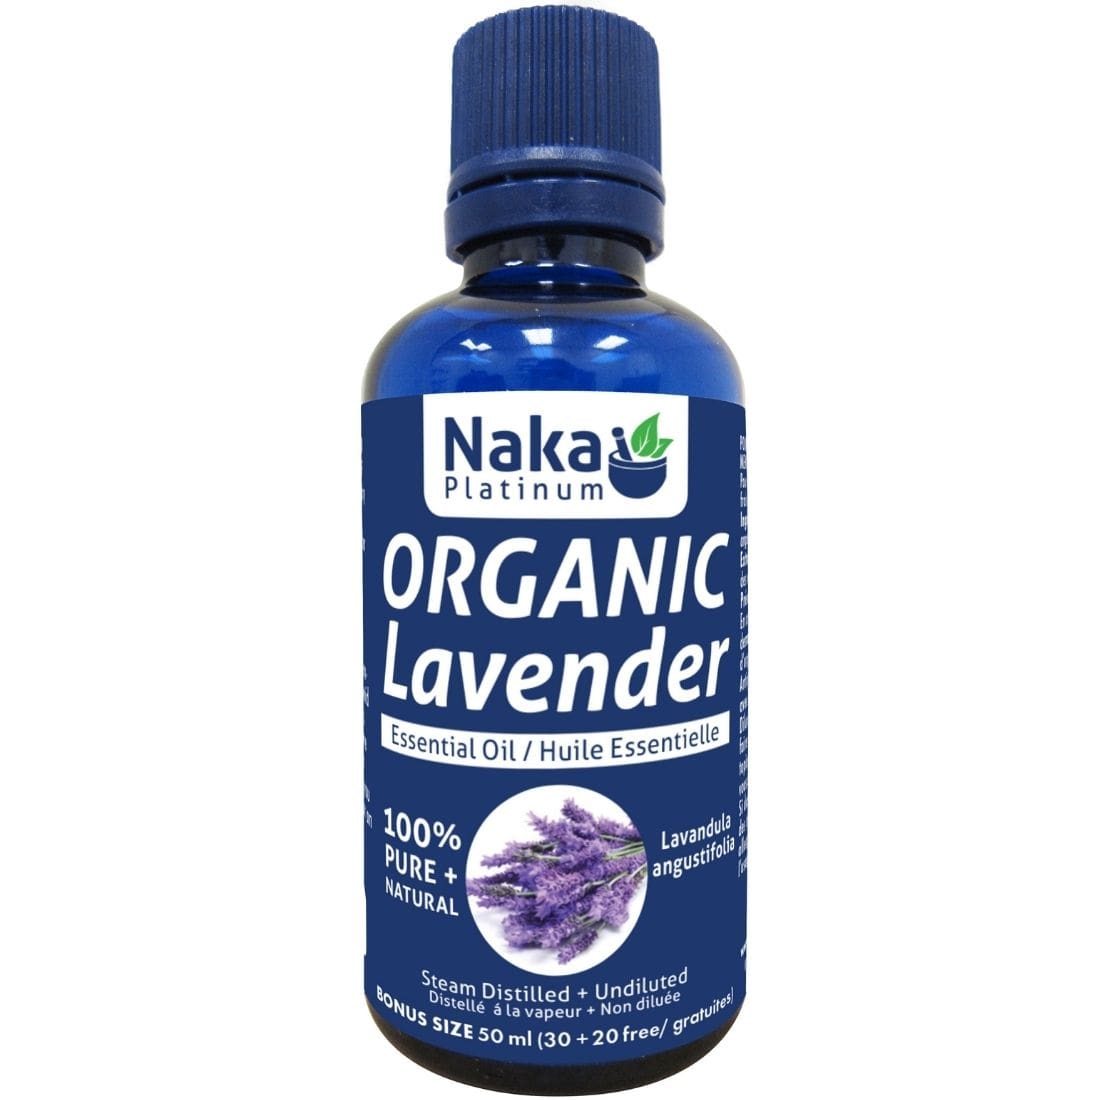 Naka Platinum Organic Lavender Essential Oil, 50ml